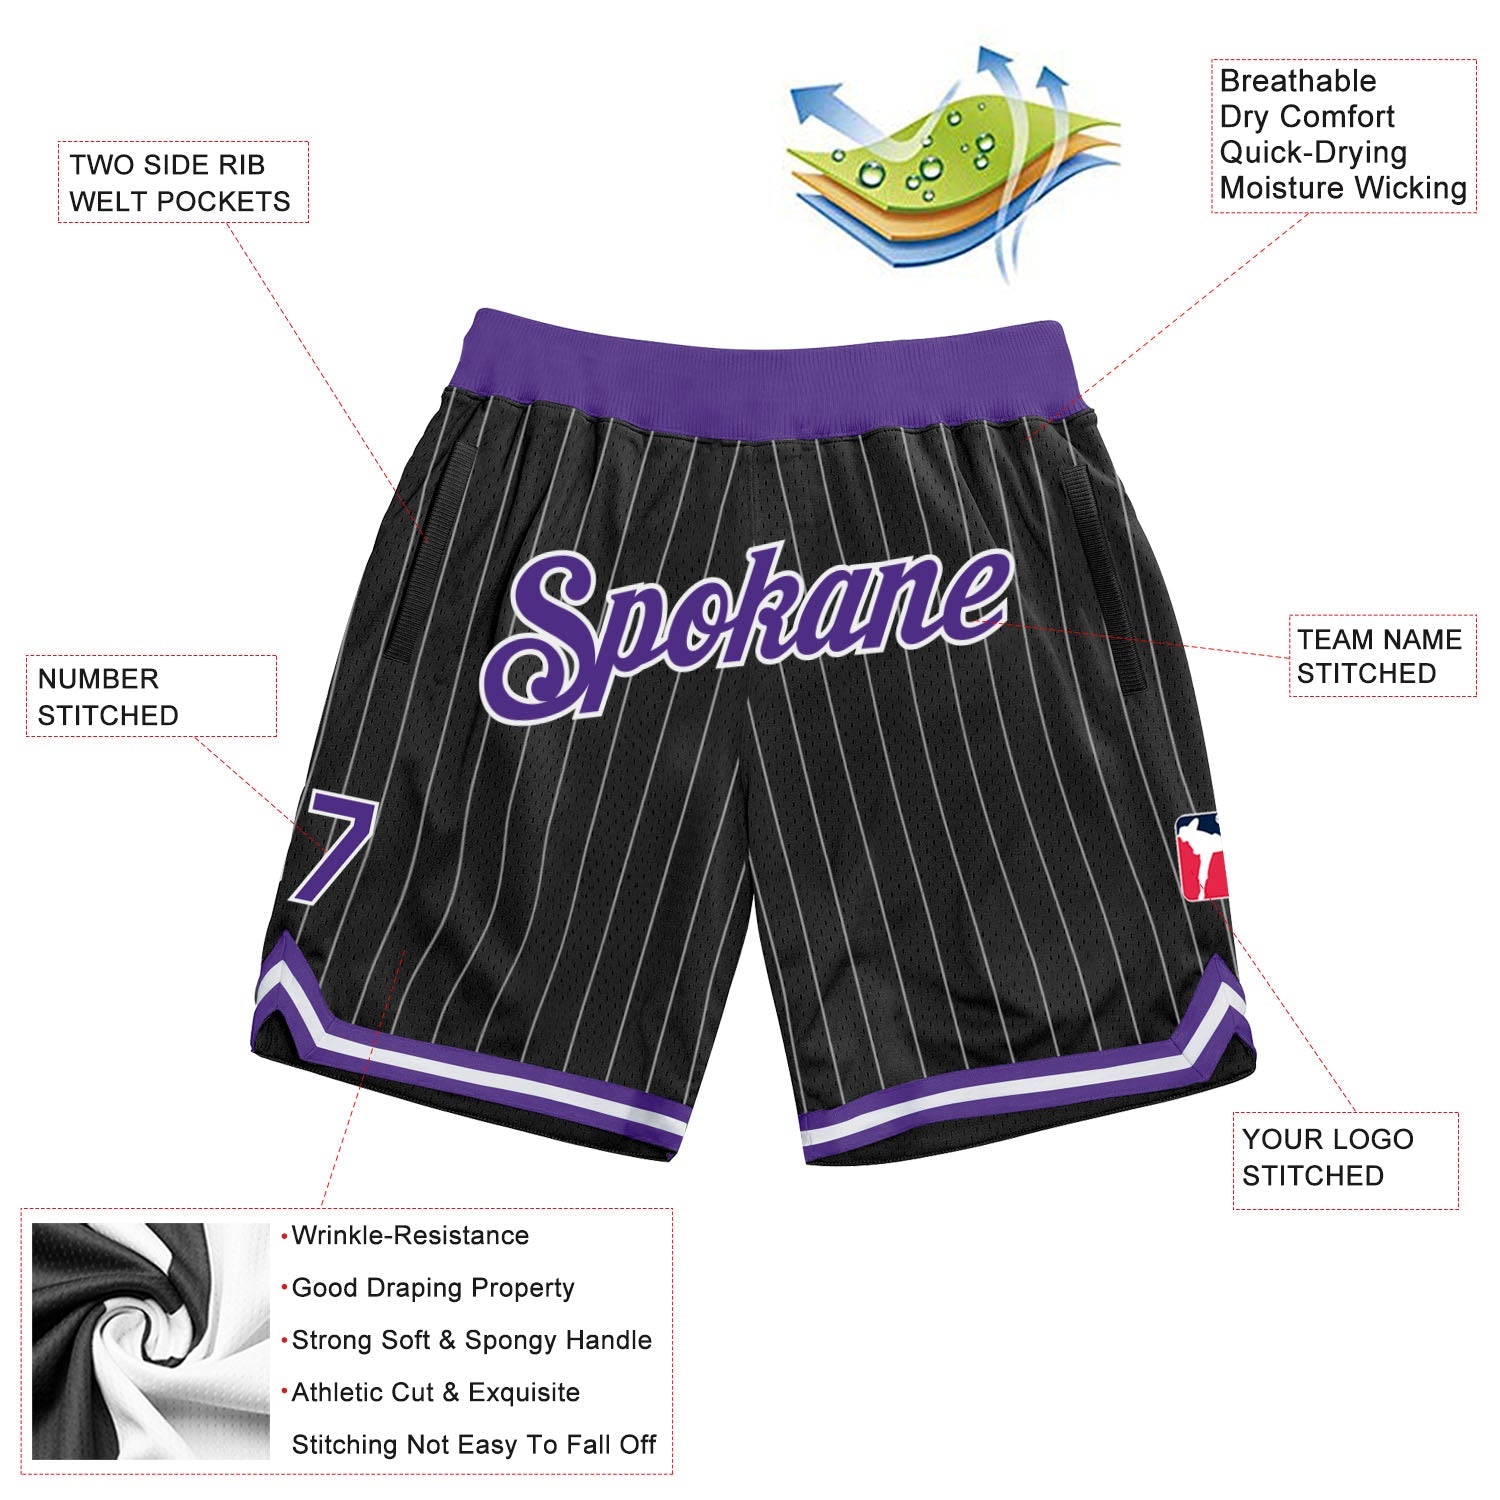 Custom Black White Pinstripe Purple-White Authentic Basketball Shorts